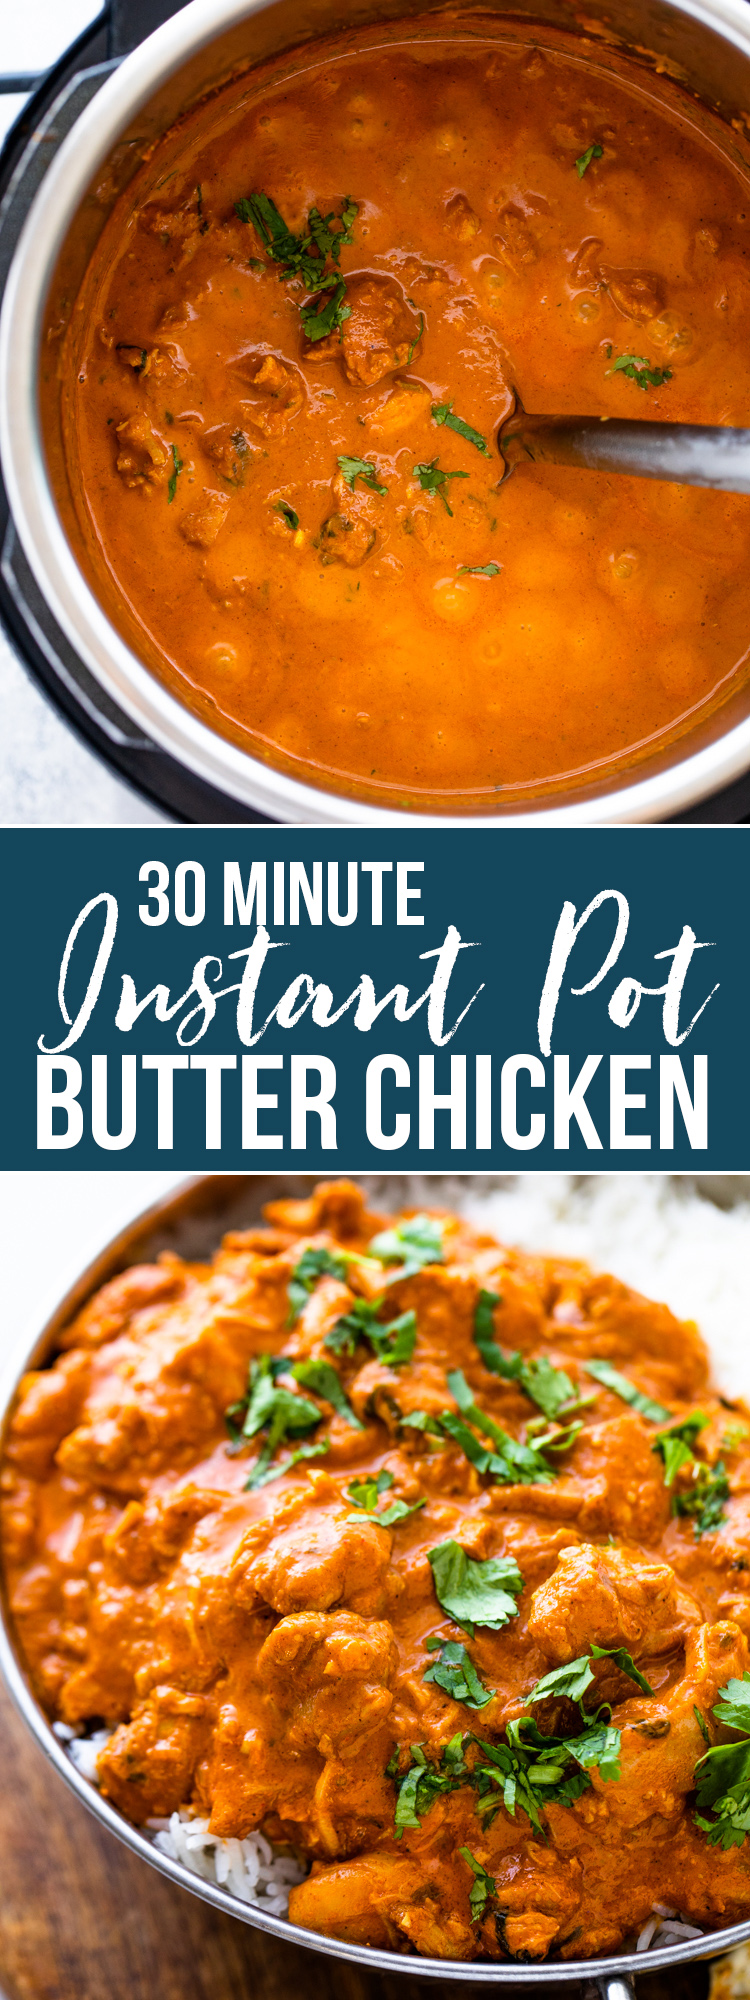 30 Minute Instant Pot Butter Chicken